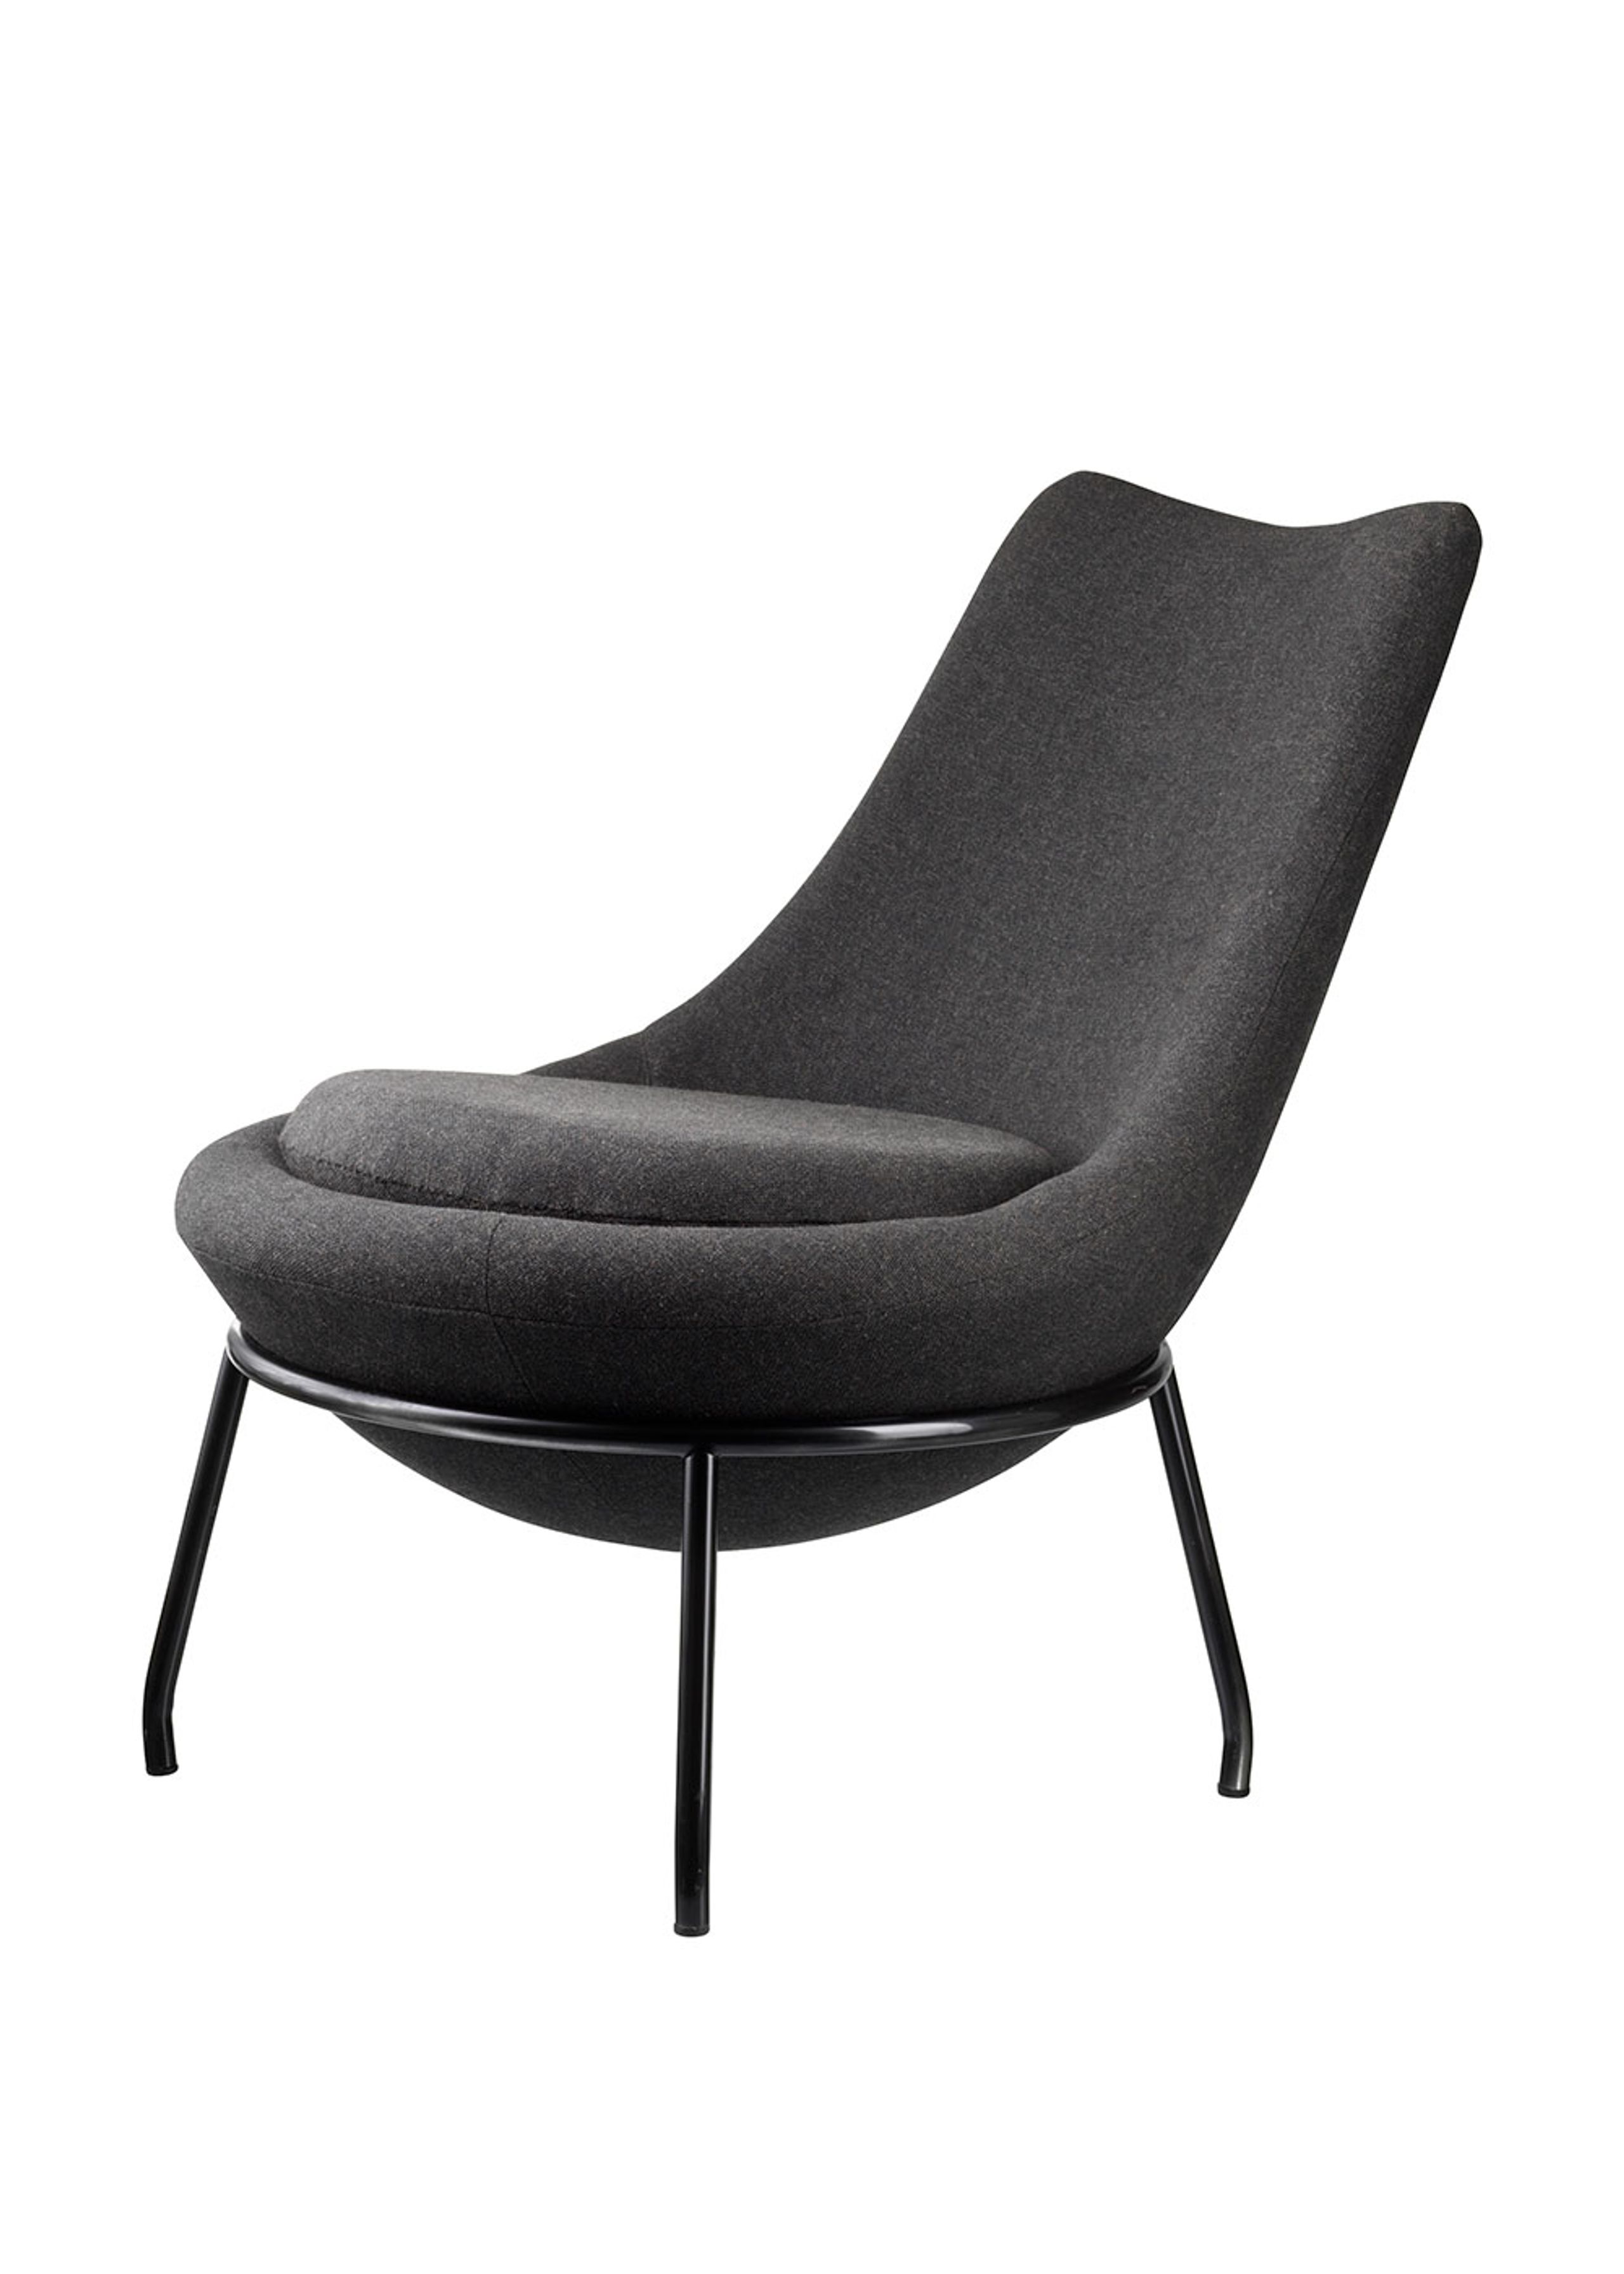 FDB Møbler / Furniture - Lounge stoel - L40 - Bellamie - Stål/Uld - Mørkegrå (Camira)/Metal